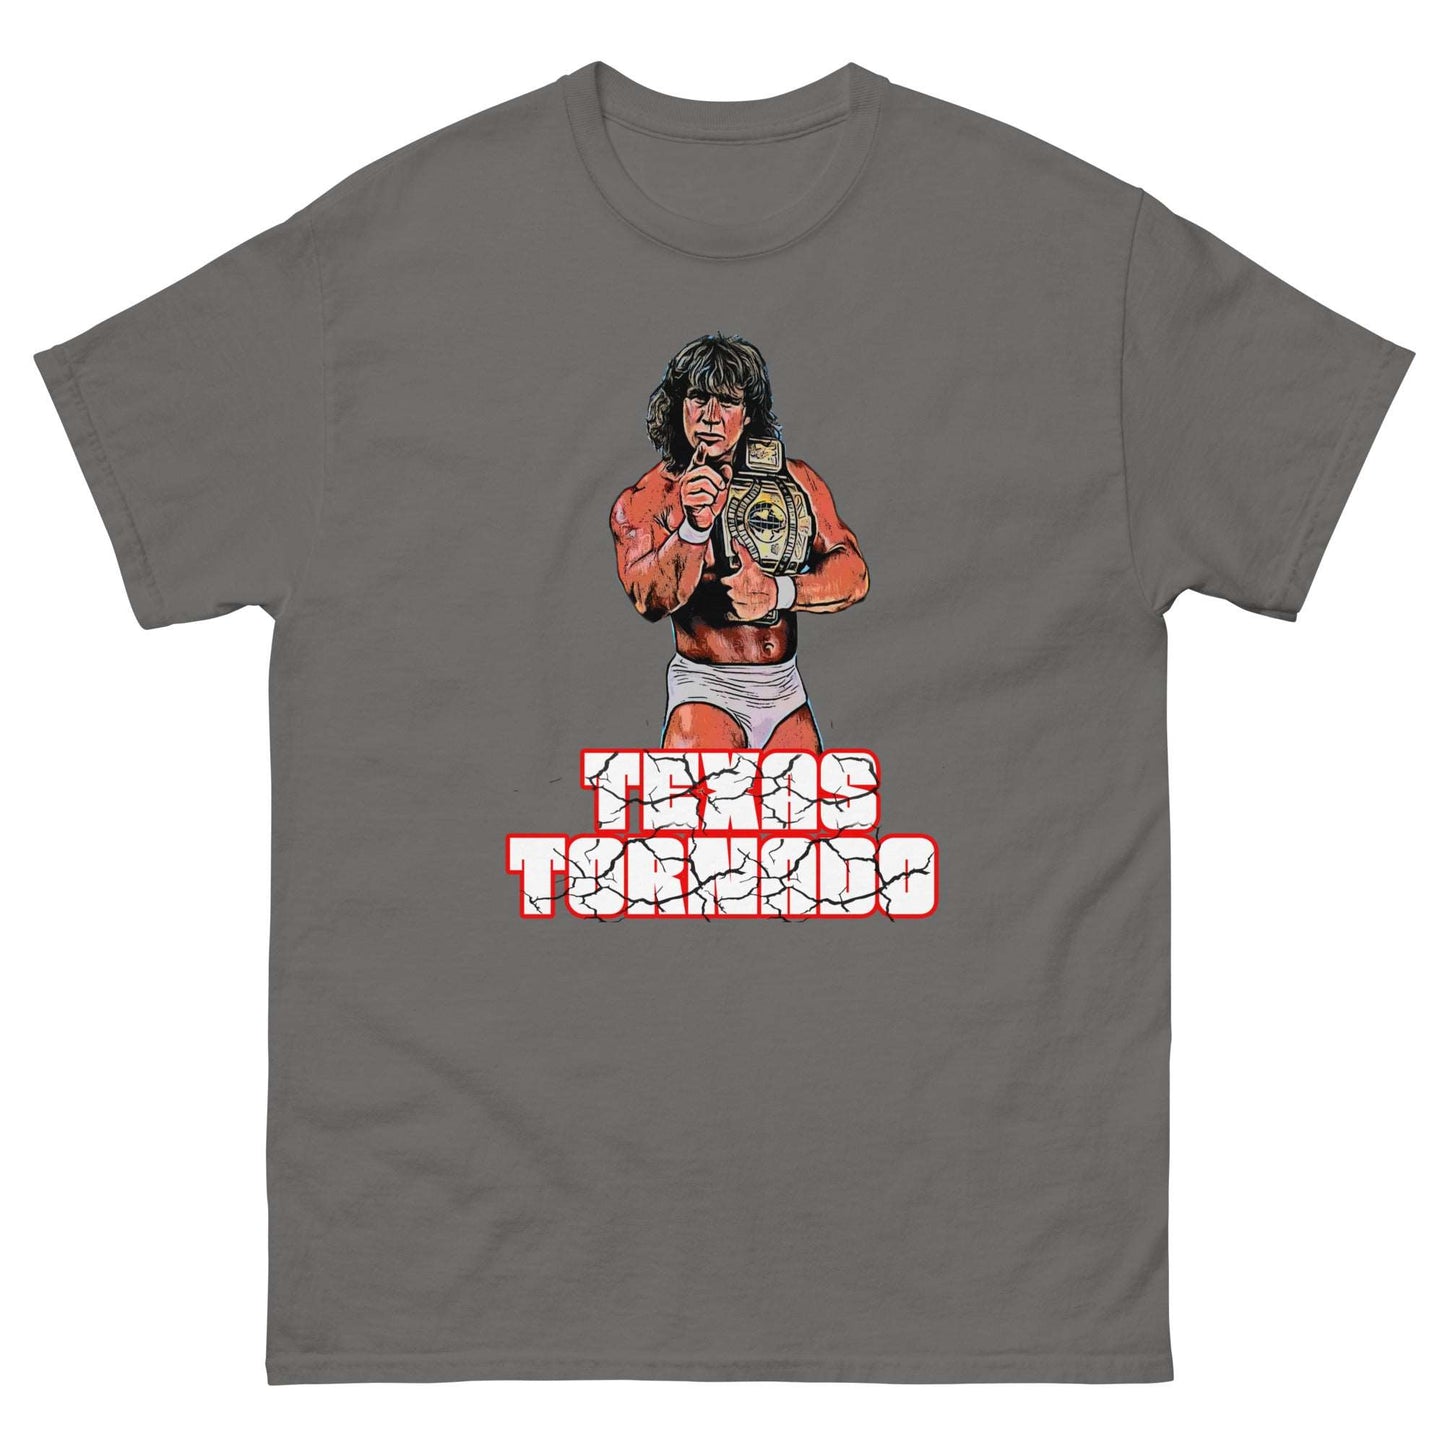 Texas Tornado T-Shirt - 80s Wrestling Classic Tee - thenightmareinc